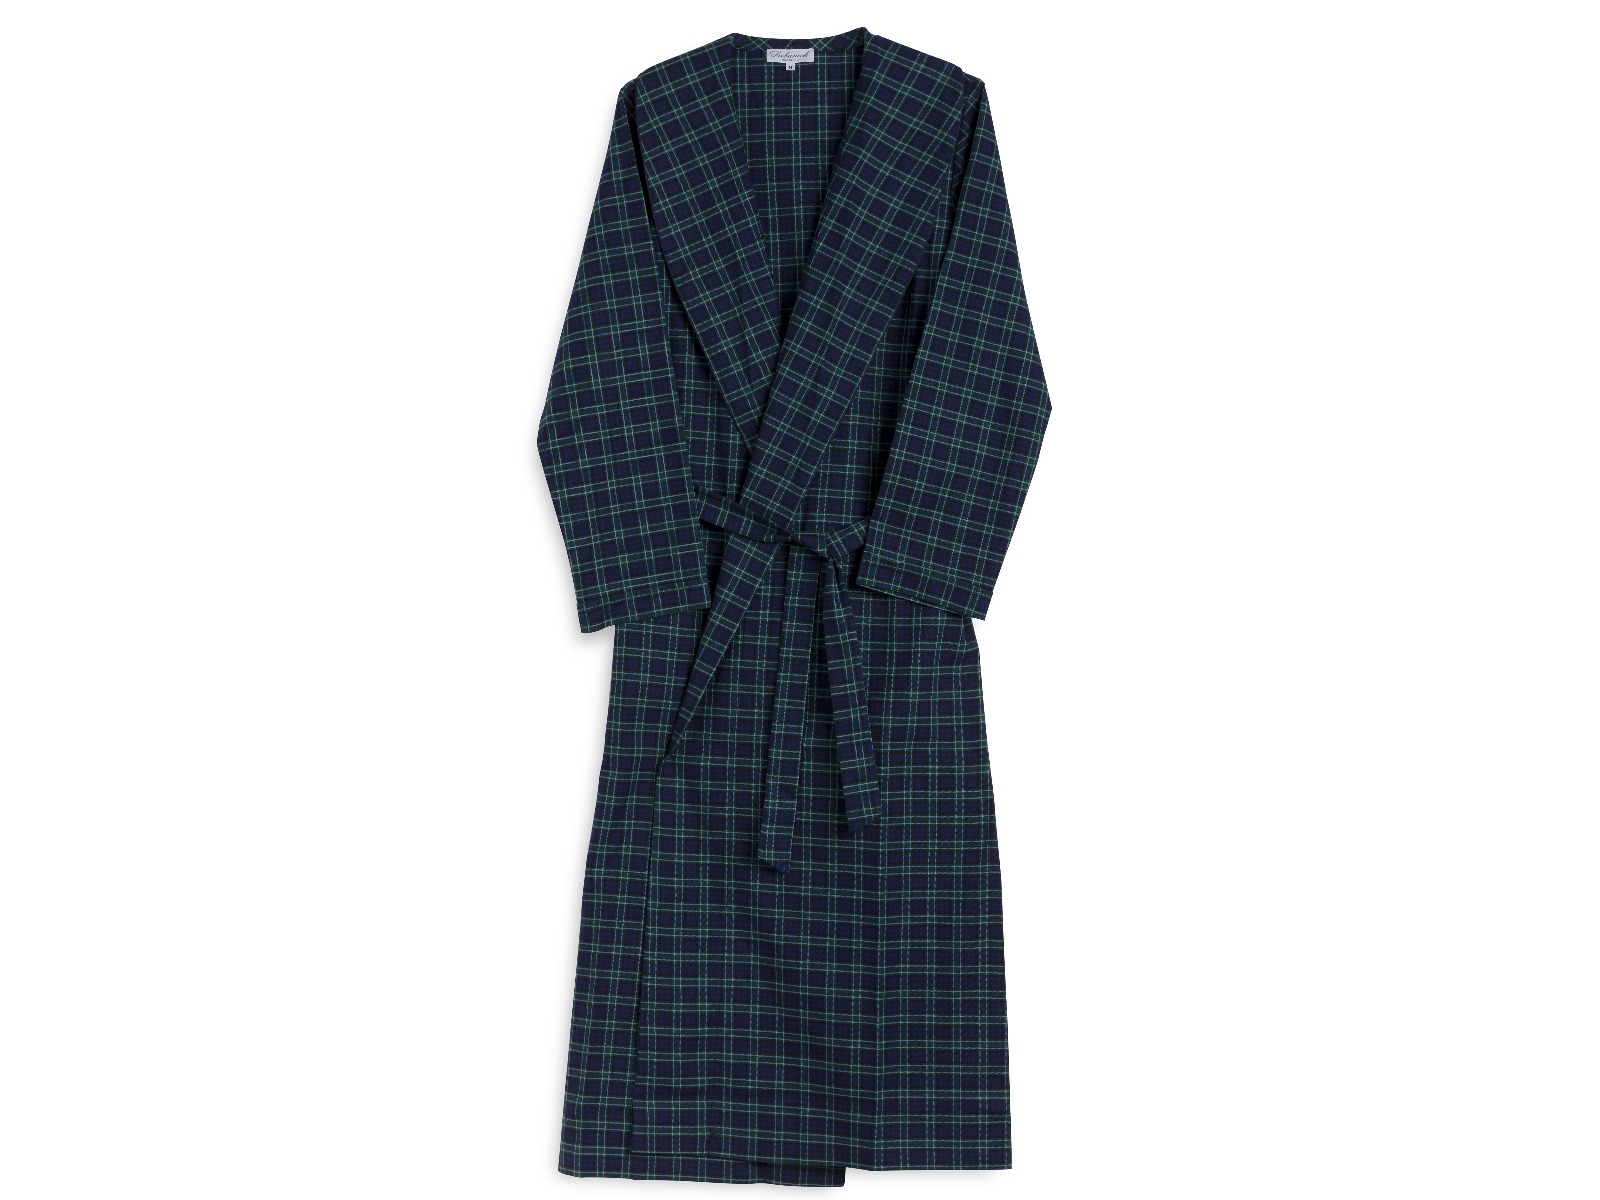 Siebaneck, i pigiami artigianali italiani: - donna - mod.11 Bis donna scozzese blu e verde 